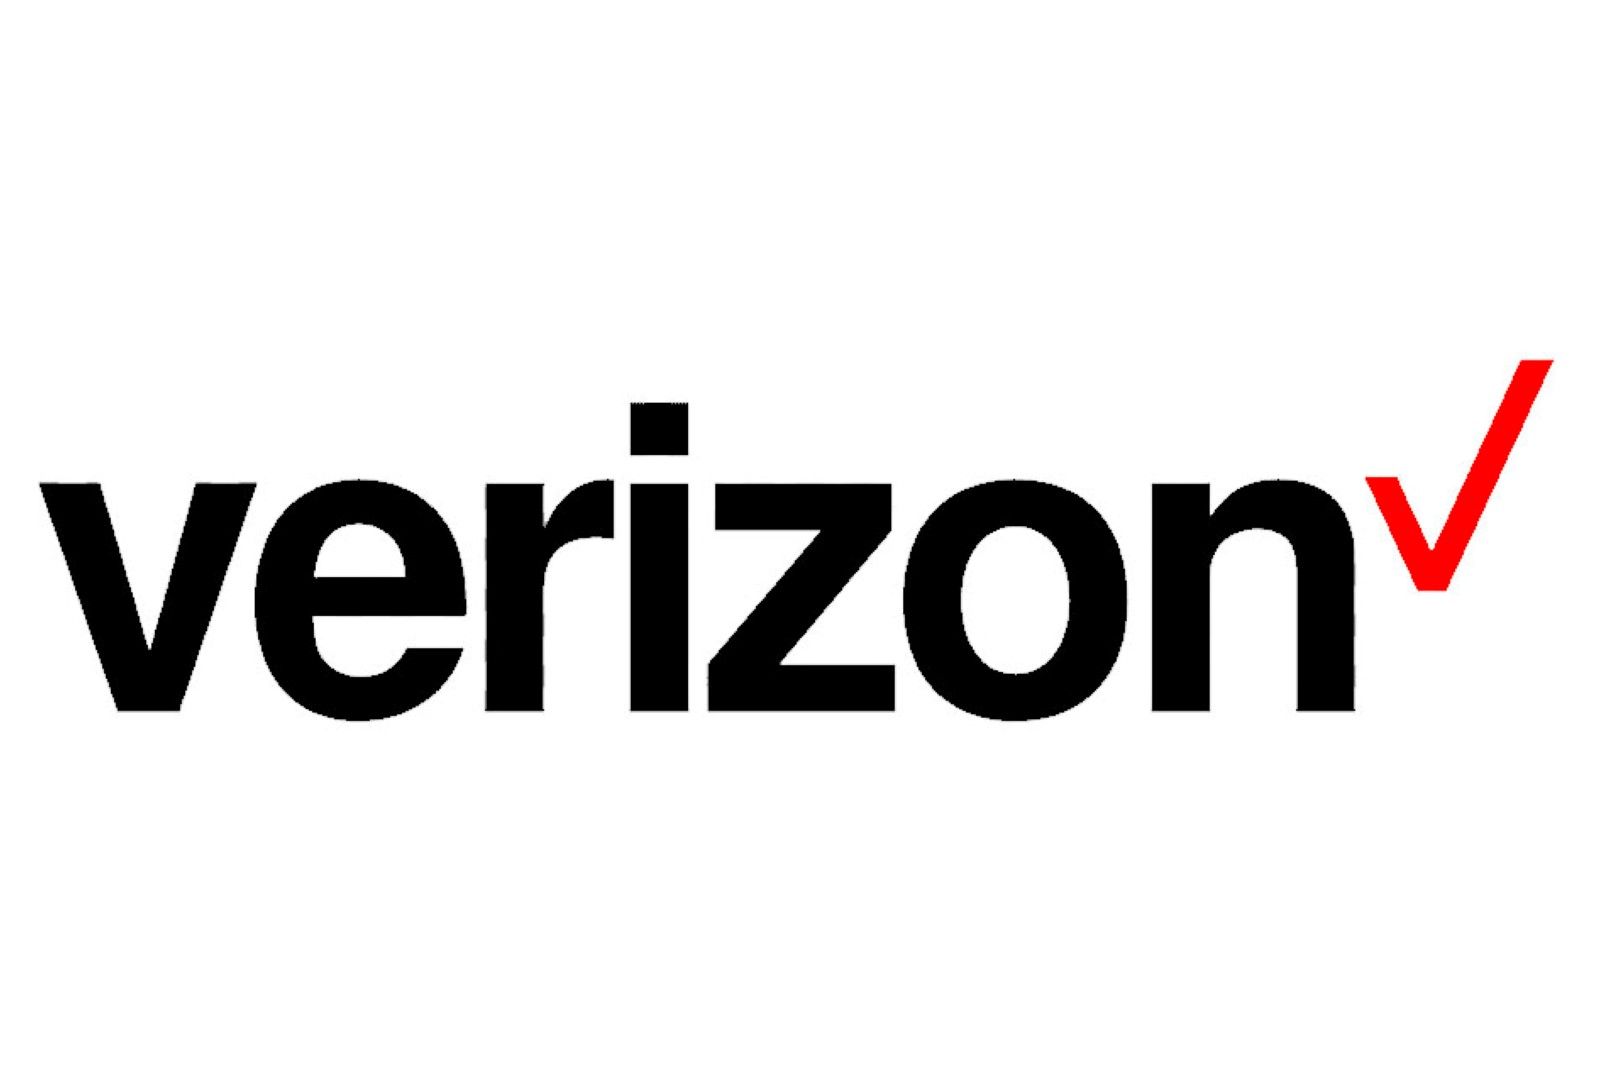 verizon logo image on white background